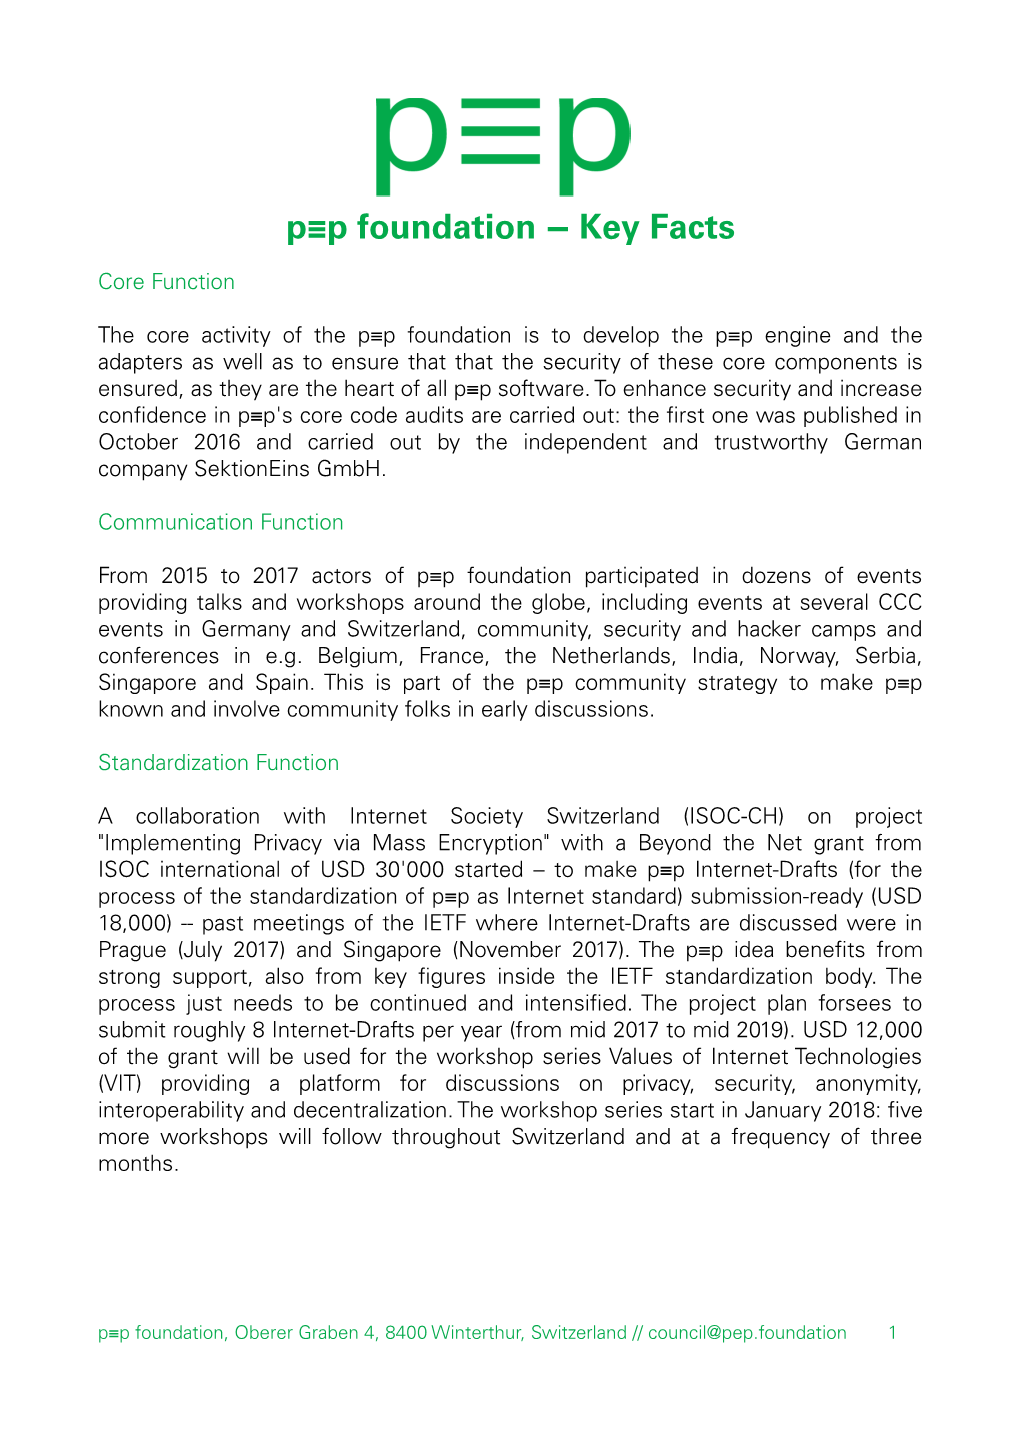 P≡P Foundation Key Facts ‒